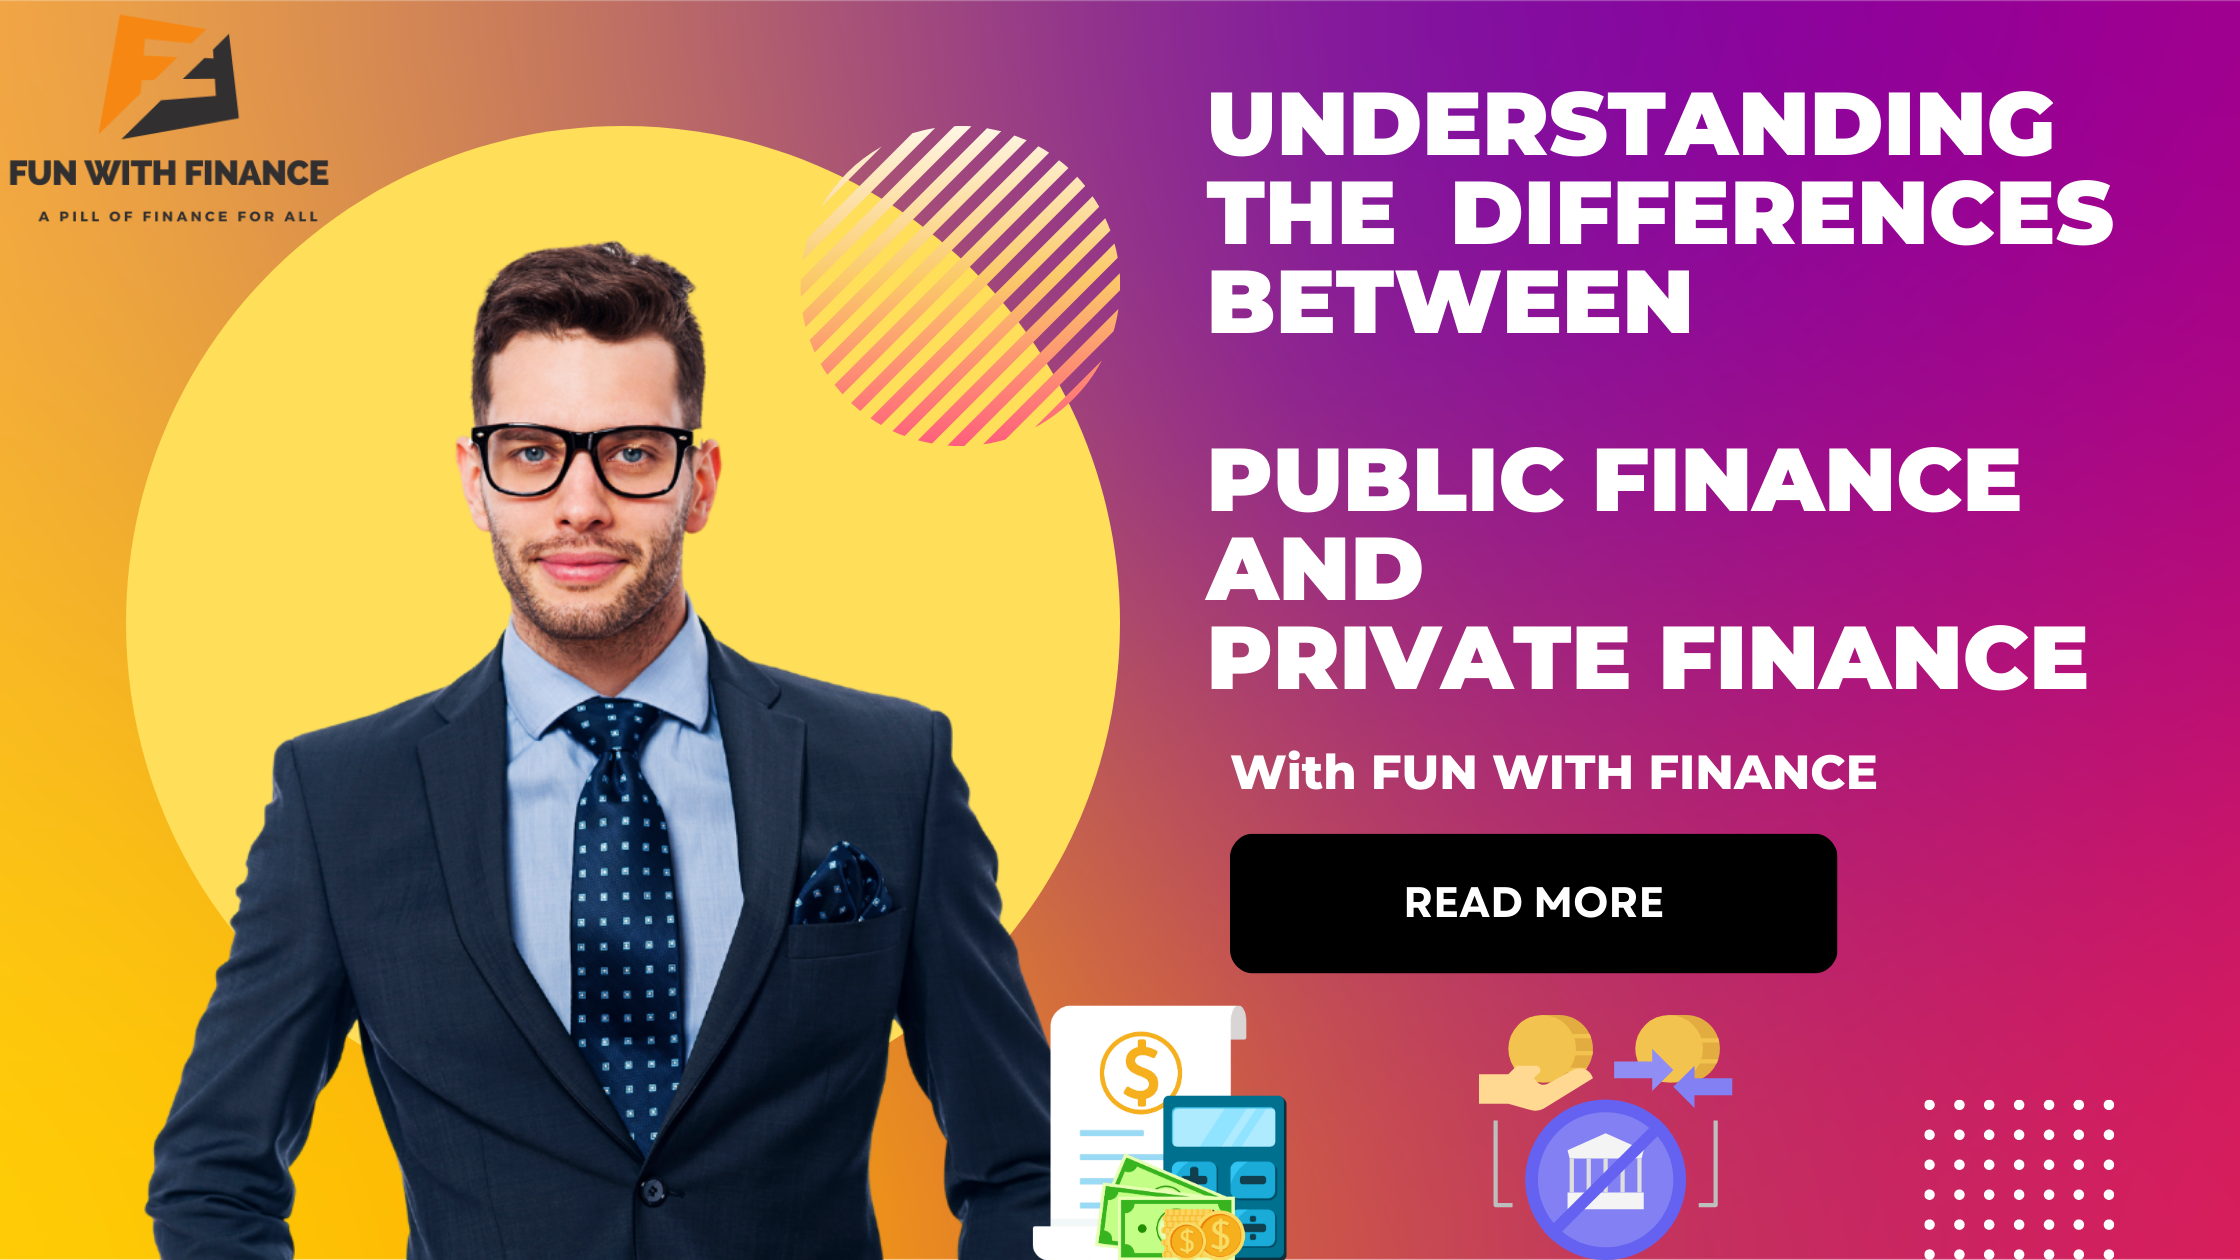 Public Finance And Private Finance